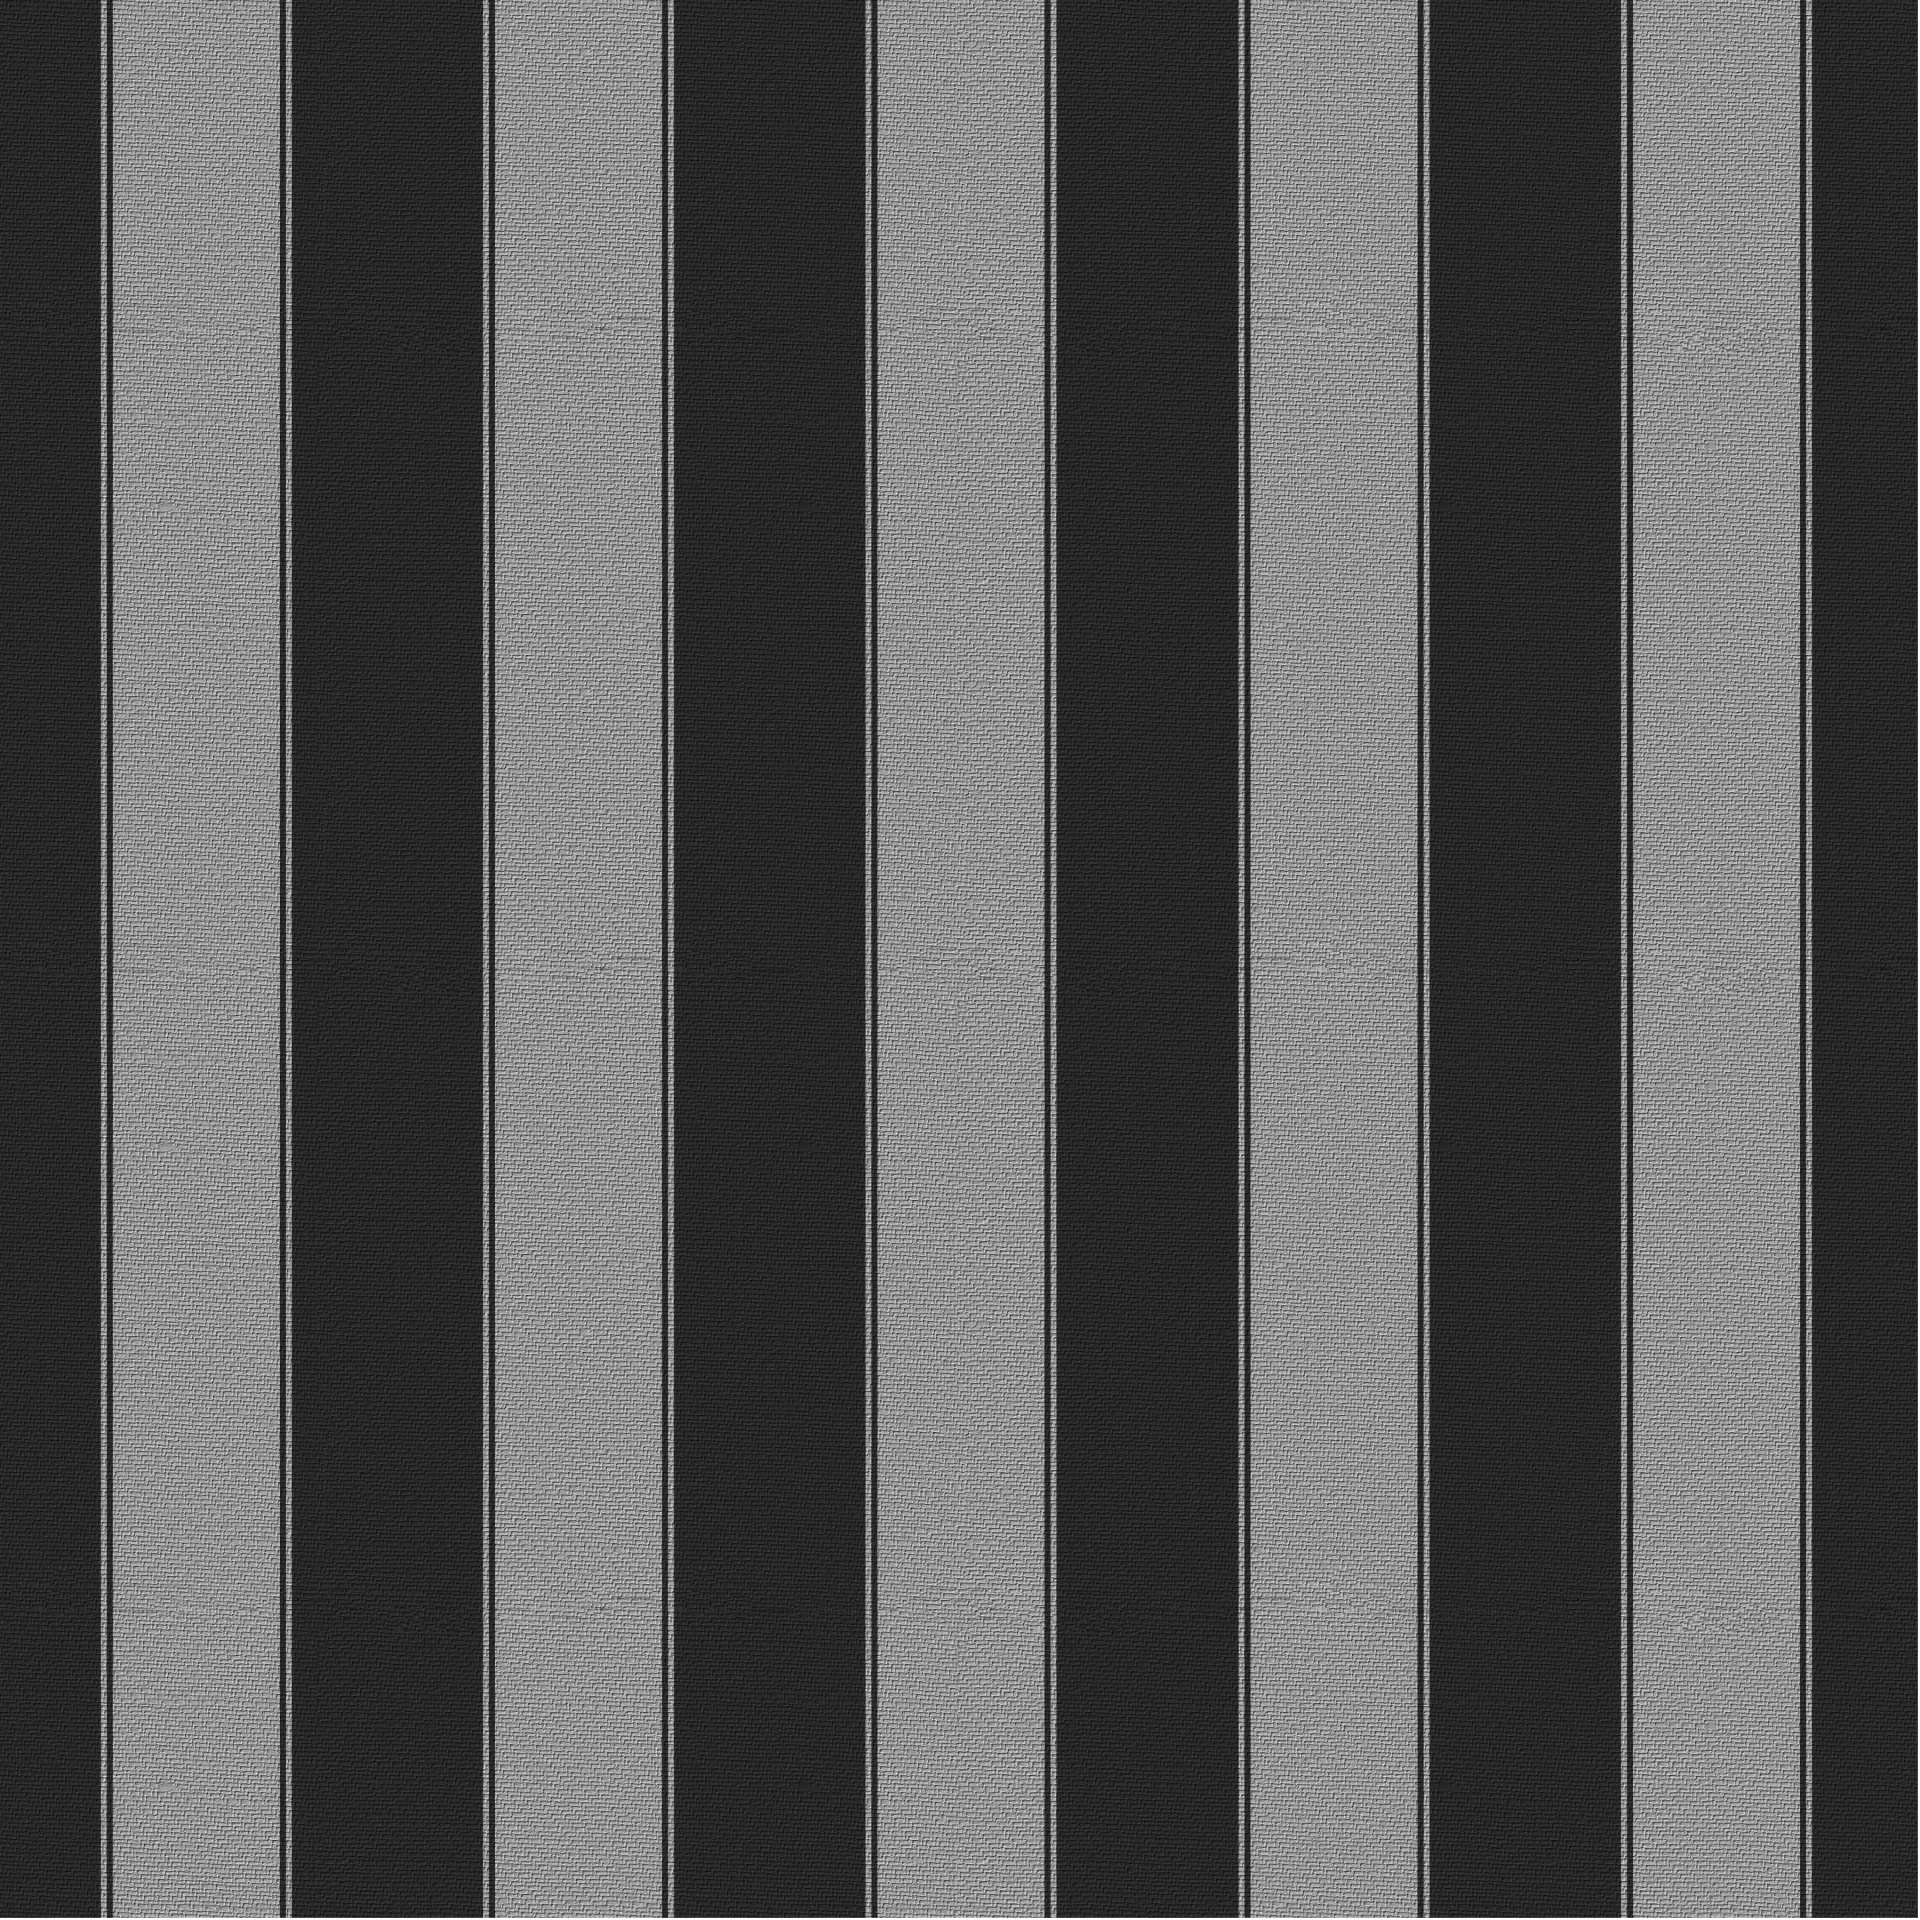 Download free photo of Stripes,stripe,striped,black,grey - from needpix.com